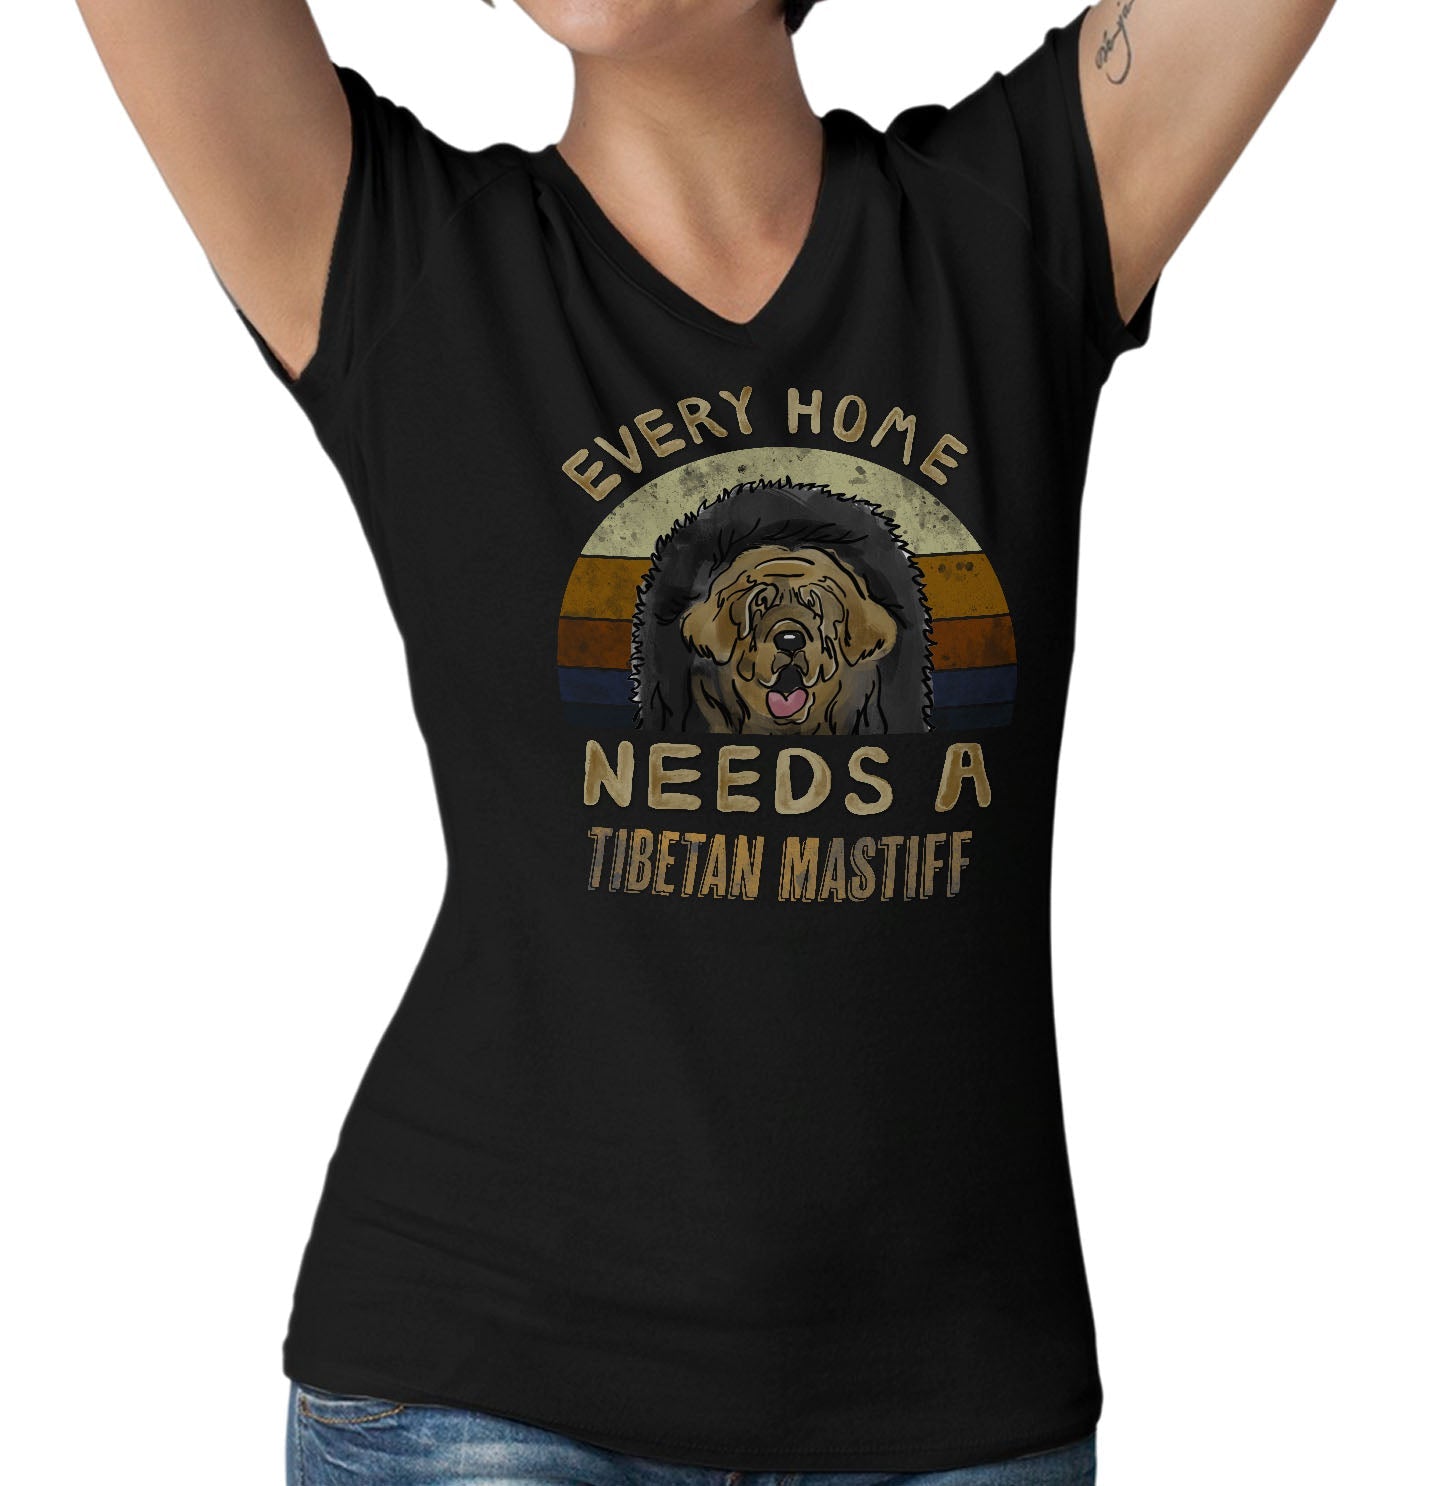 Every Home Needs a Tibetan Mastiff - Women's V-Neck T-Shirt